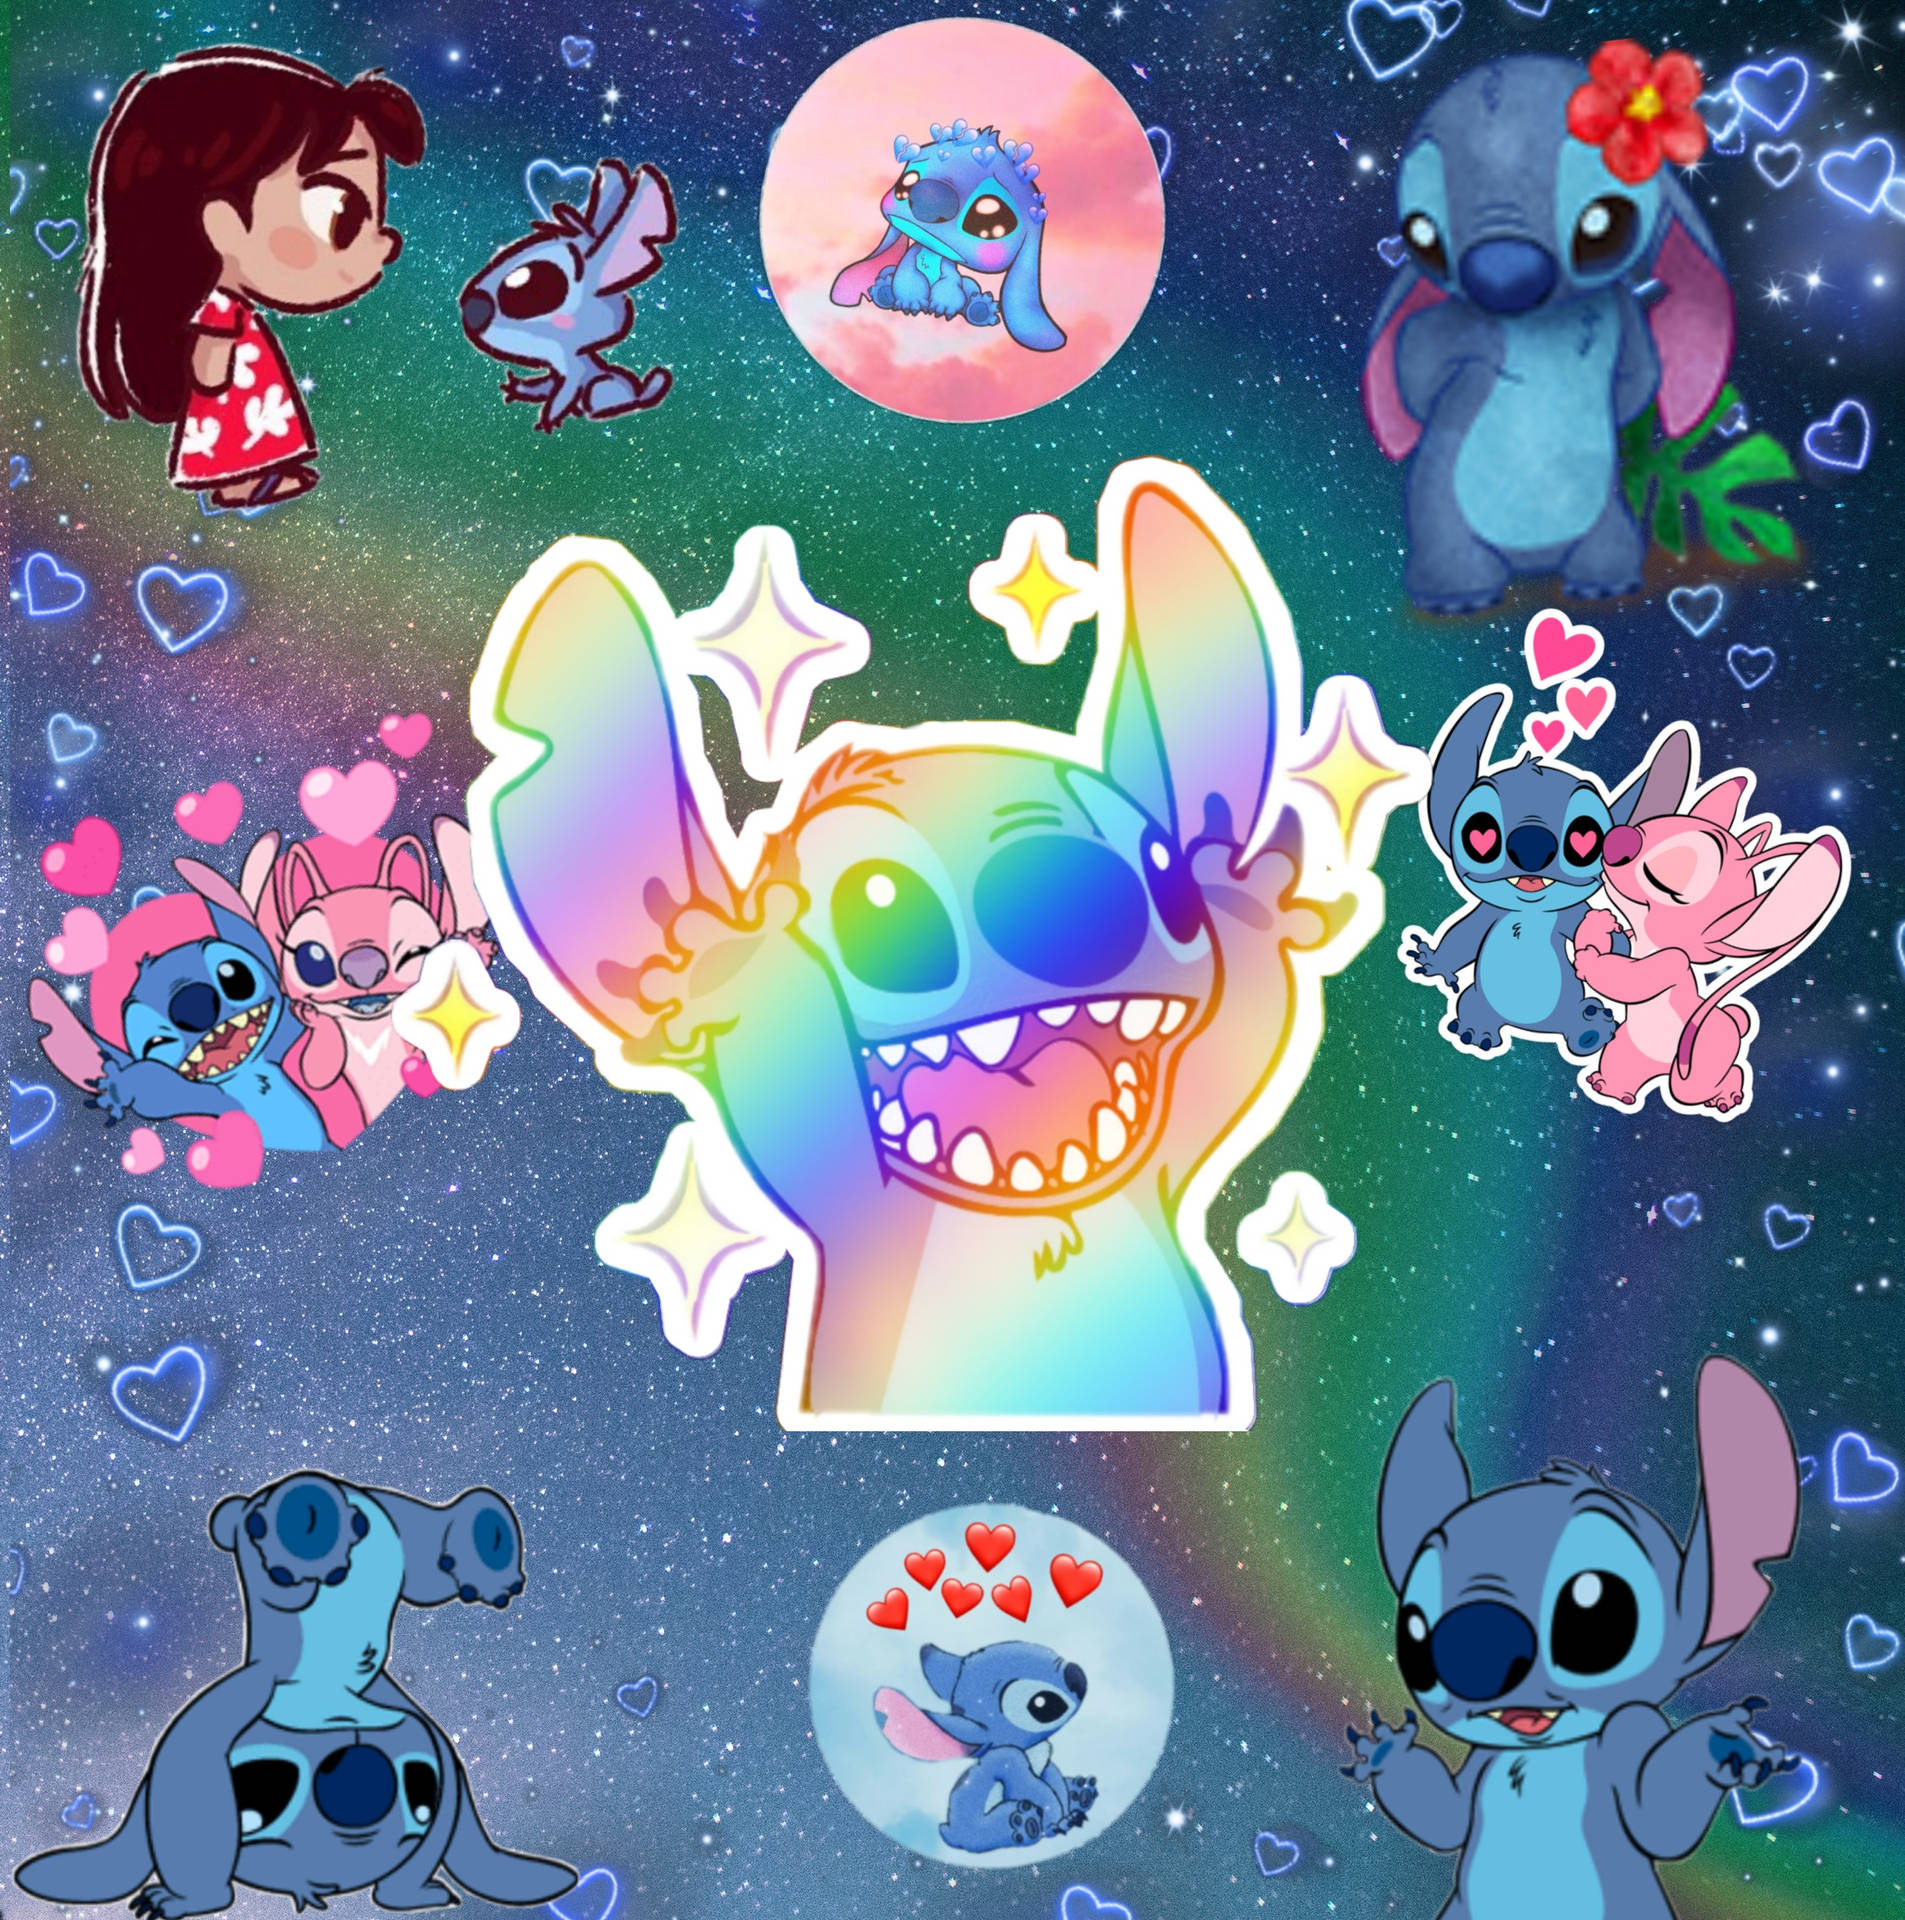 Rainbow-themed Stitch Collage